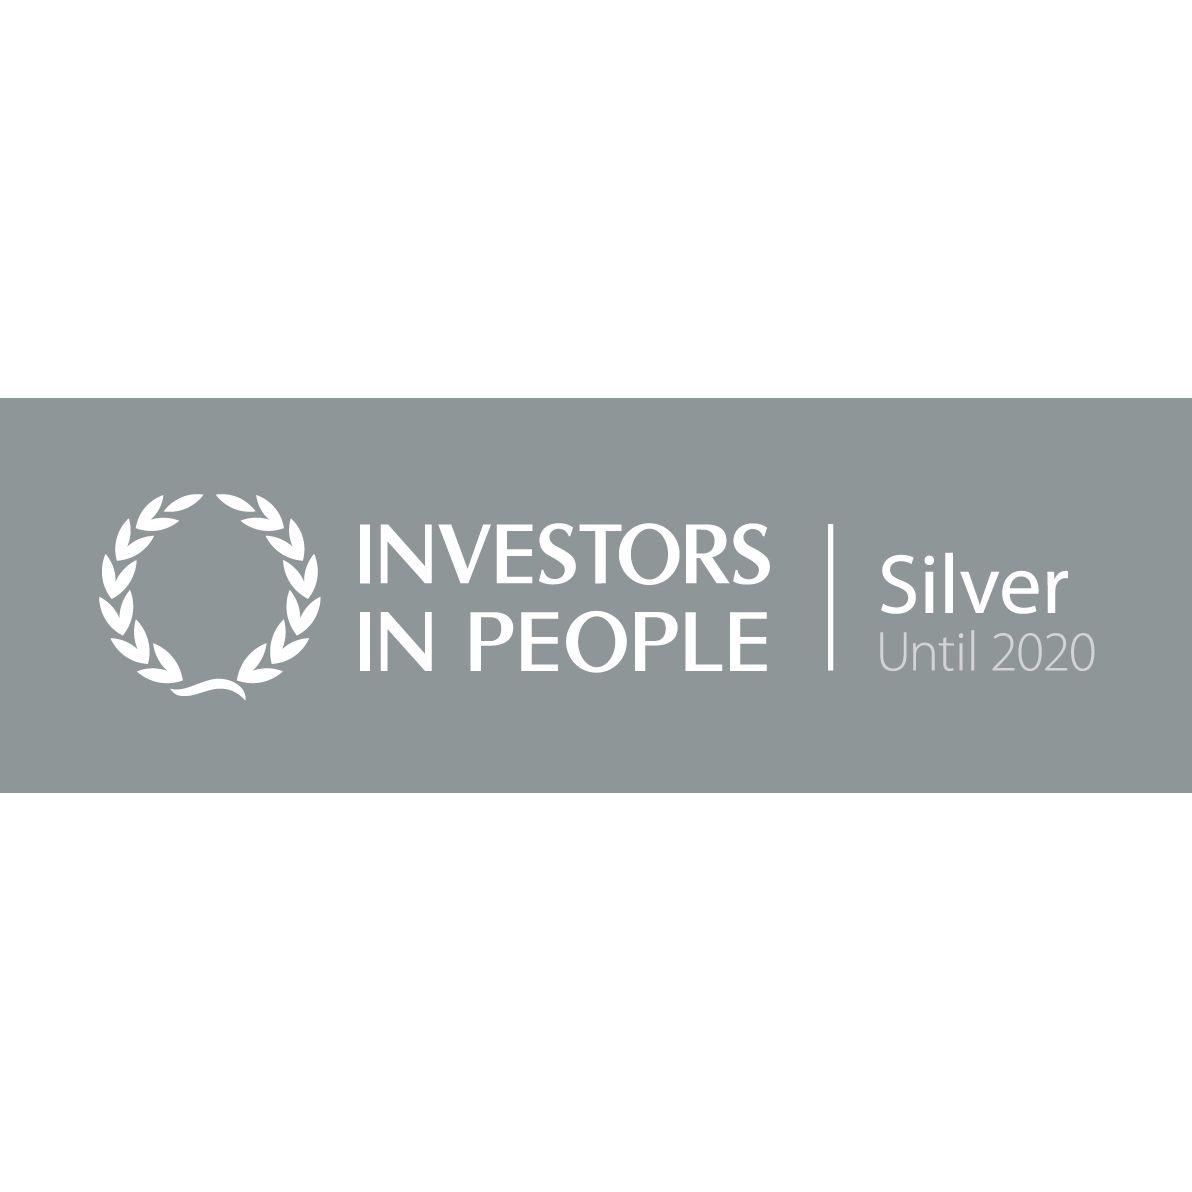 Investors in People Logo - McLaren achieve Silver Award for Investors in People - McLaren